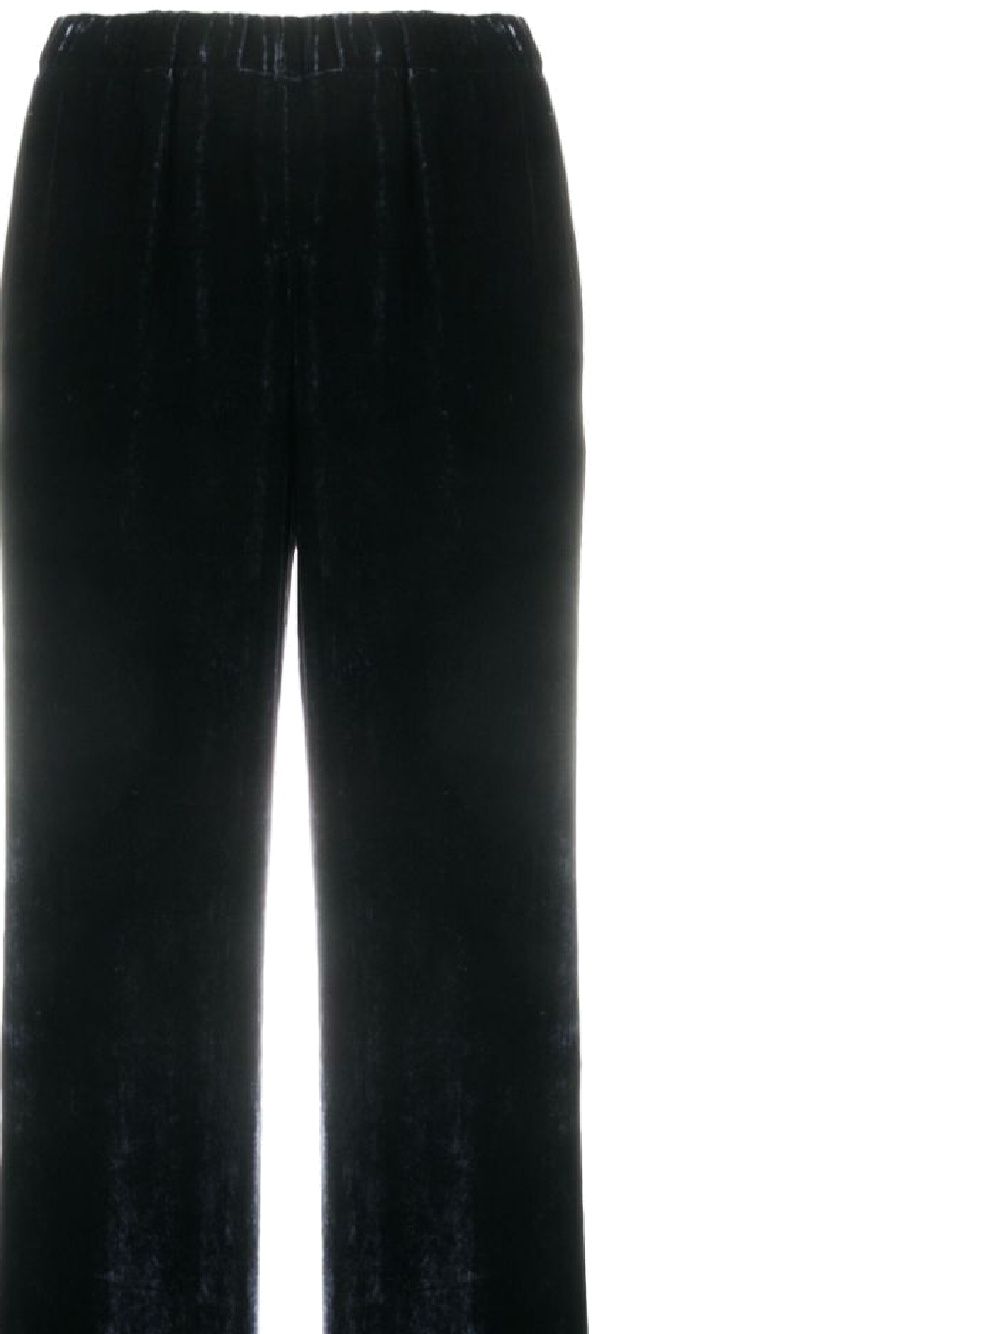 Velvet trousers with elasticated waist